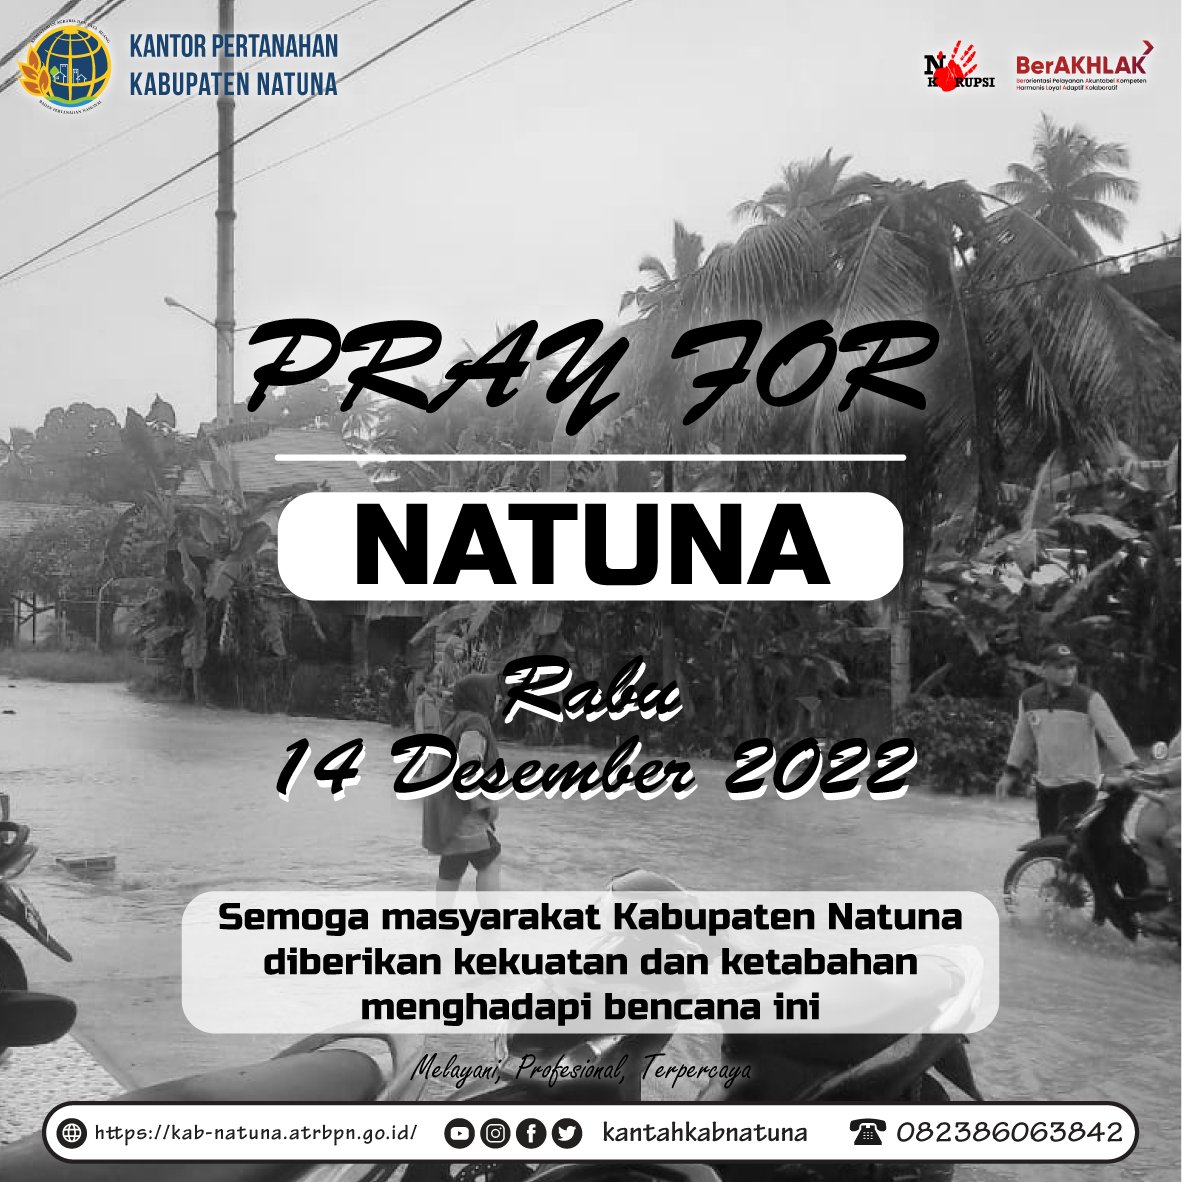 Keluarga Besar Kantor Pertanahan Kabupaten Natuna mengucapkan Turut Berduka Cita atas bencana Banjir di Kabupaten Natuna. Mari berdoa untuk keselamatan seluruh masyarakat Kabupaten Natuna yang terkena dampak bencana Banjir.

#PrayForNatuna
#BanjirNatuna
#KantorPertanahanKabNatuna